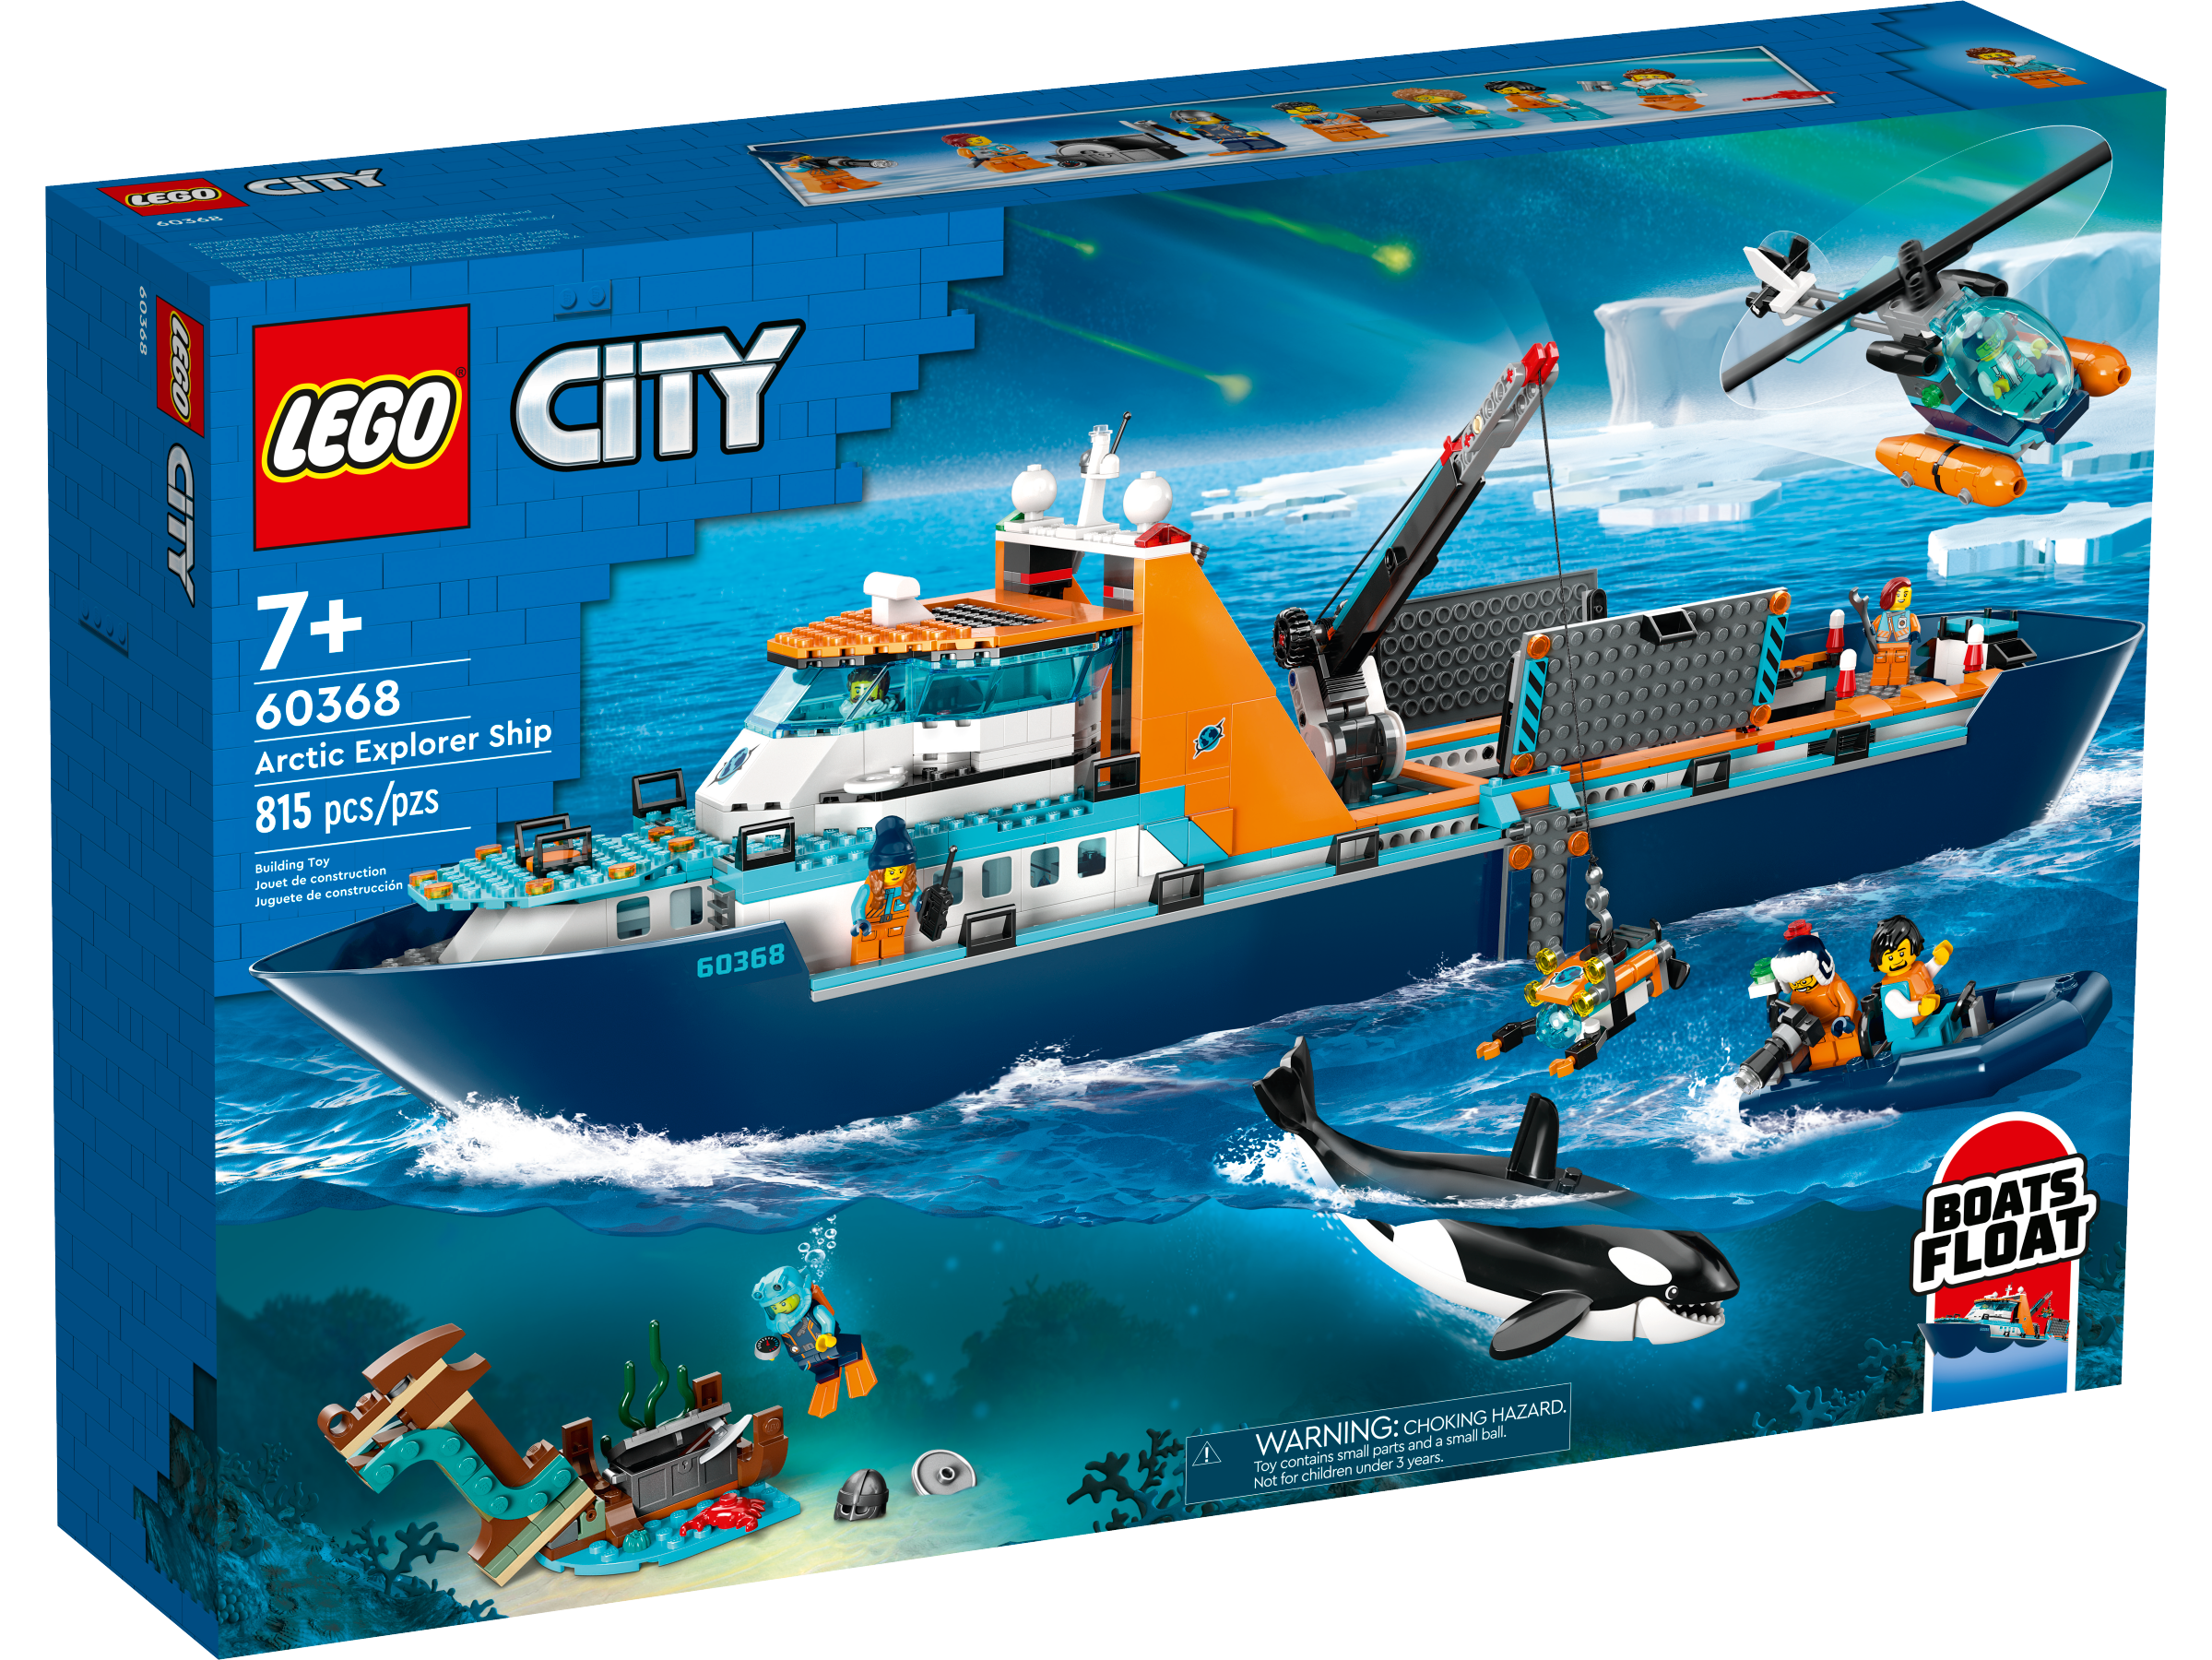 Arctic Explorer Ship 60368, City